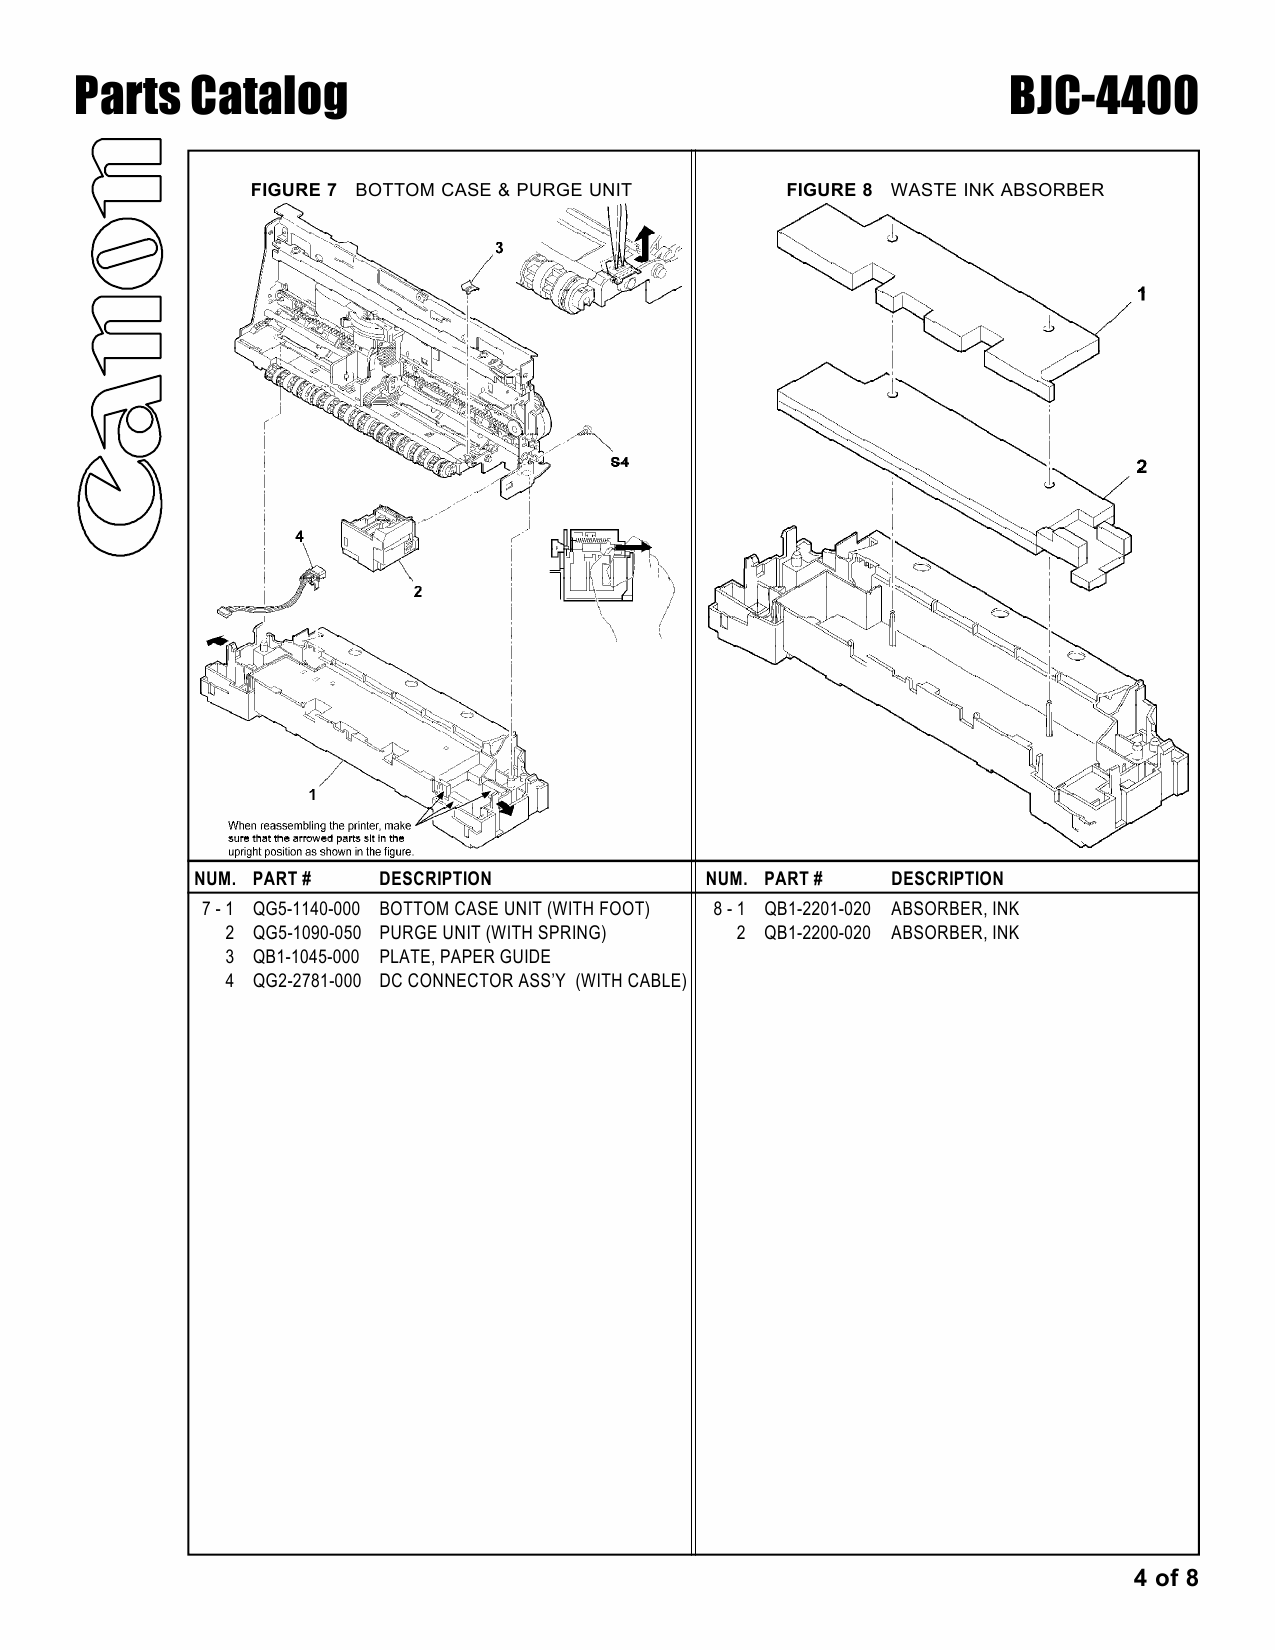 Canon BubbleJet BJC-4400 Parts Catalog Manual-4